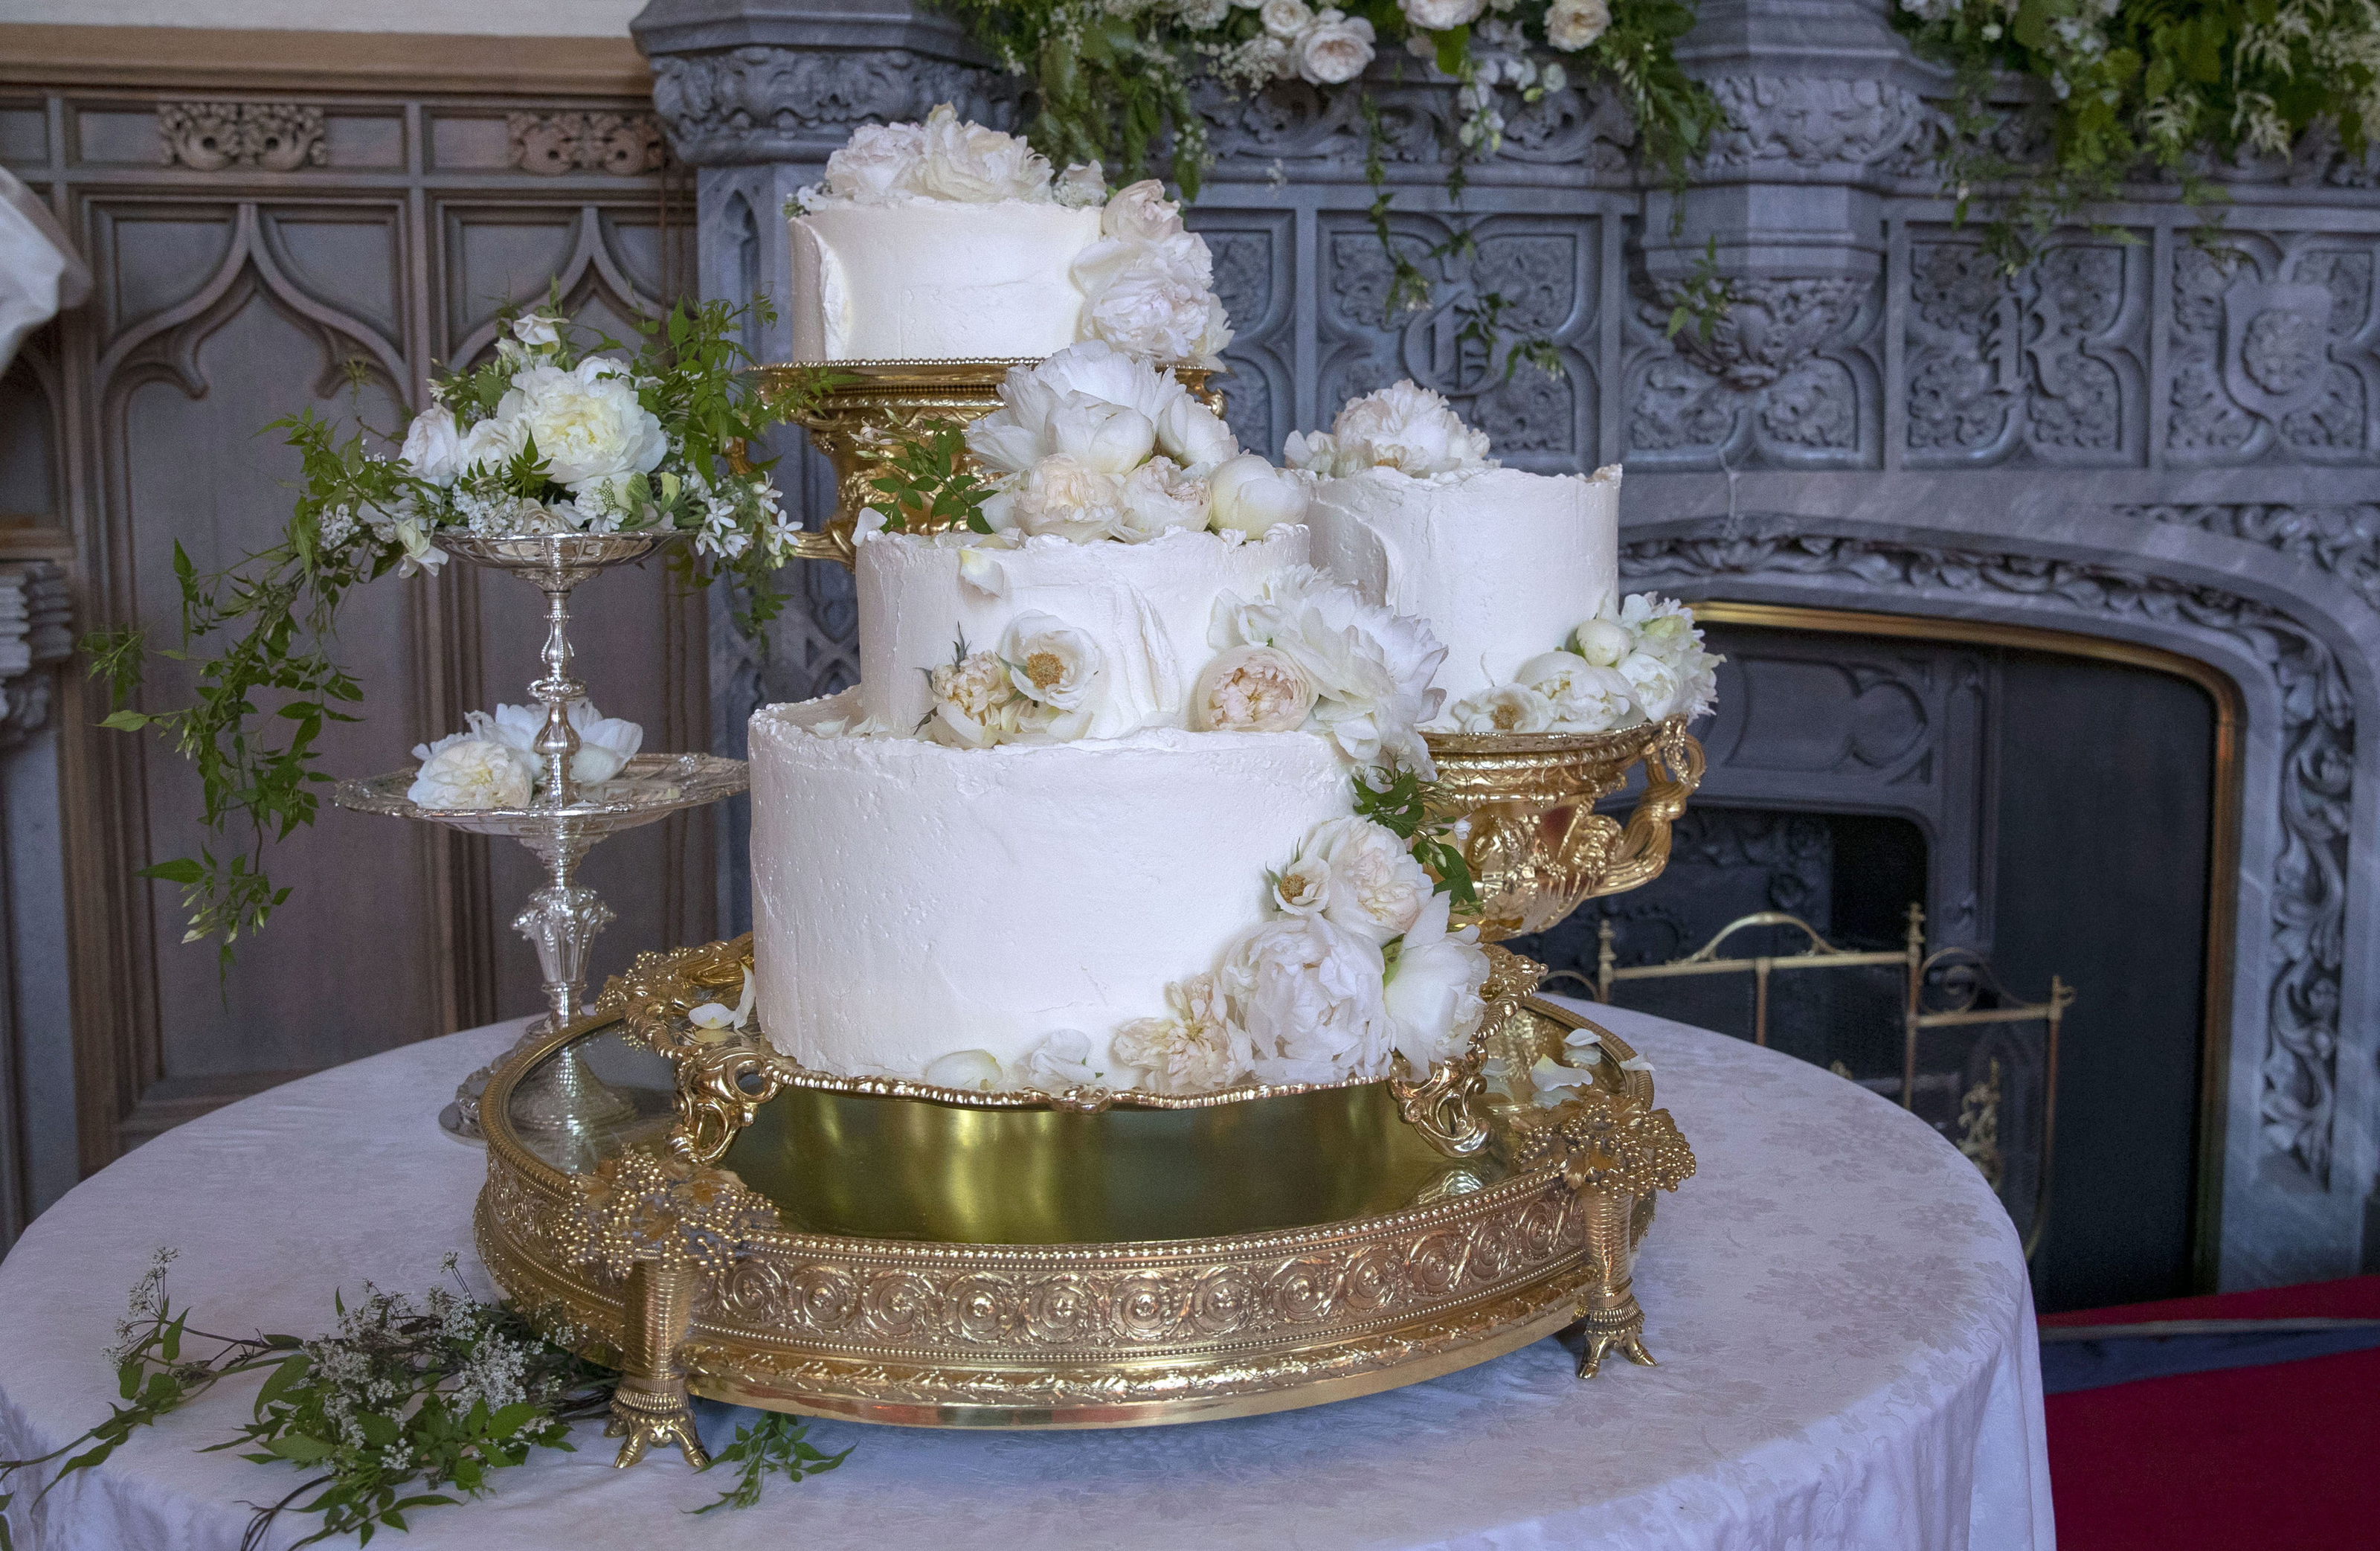 The Duke and Duchess of Sussex's wedding cake